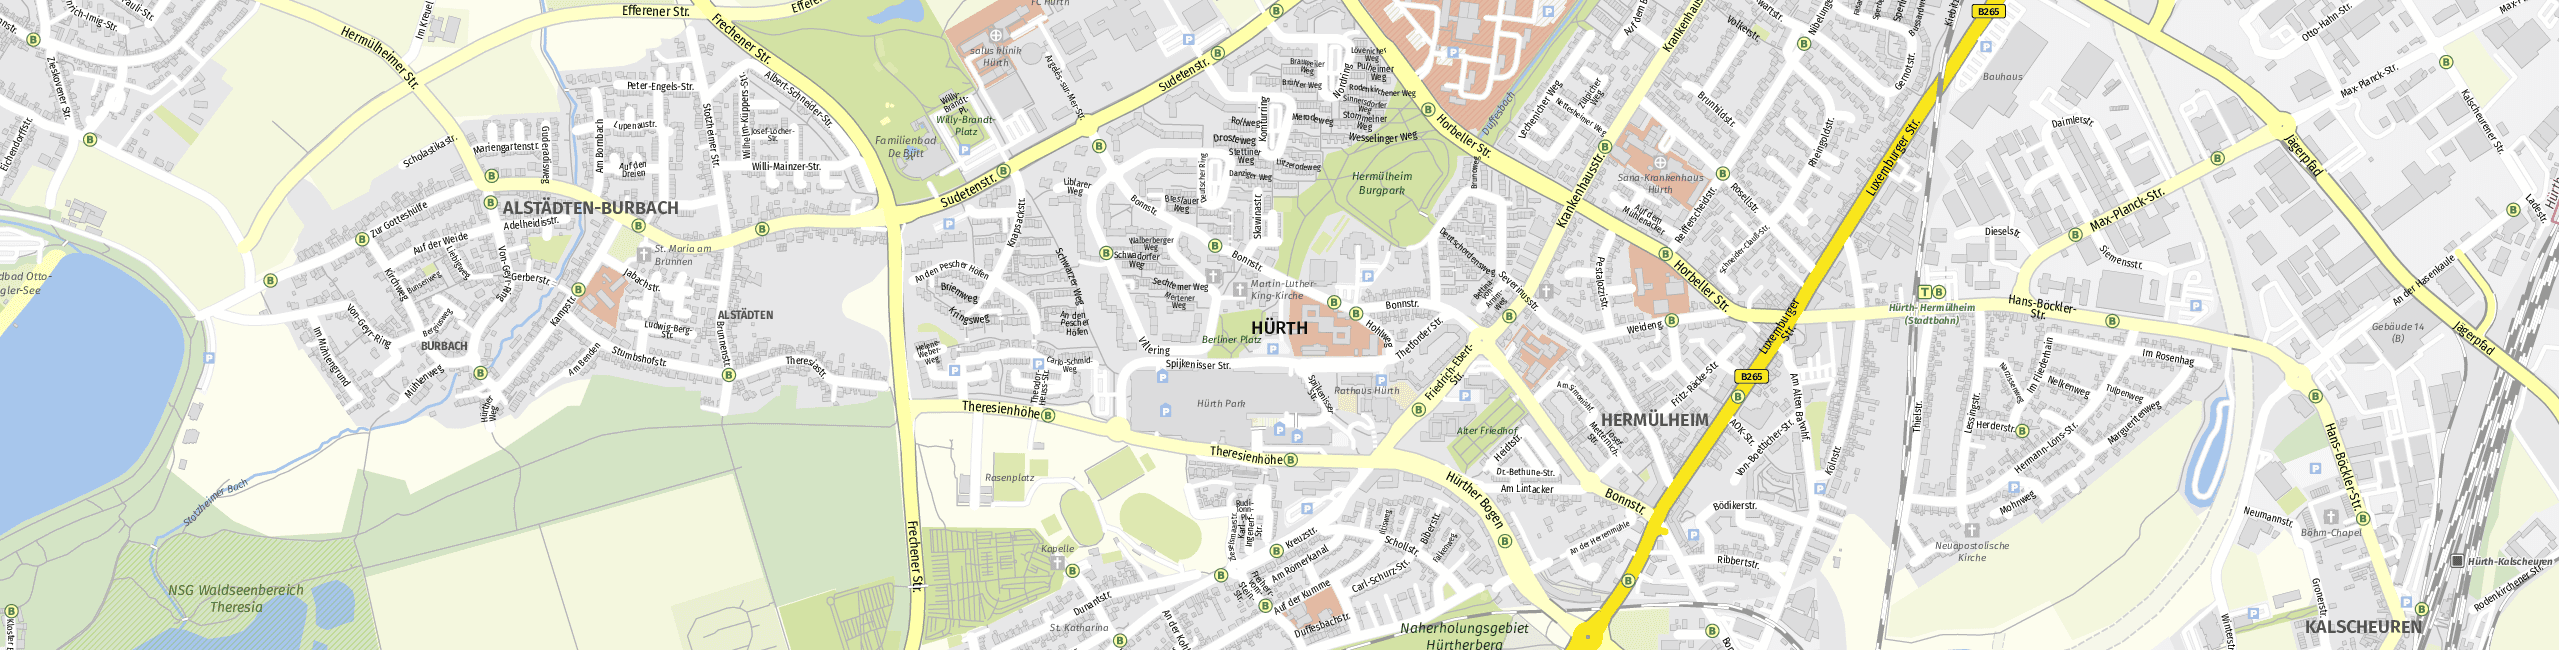 Stadtplan Hürth zum Downloaden.